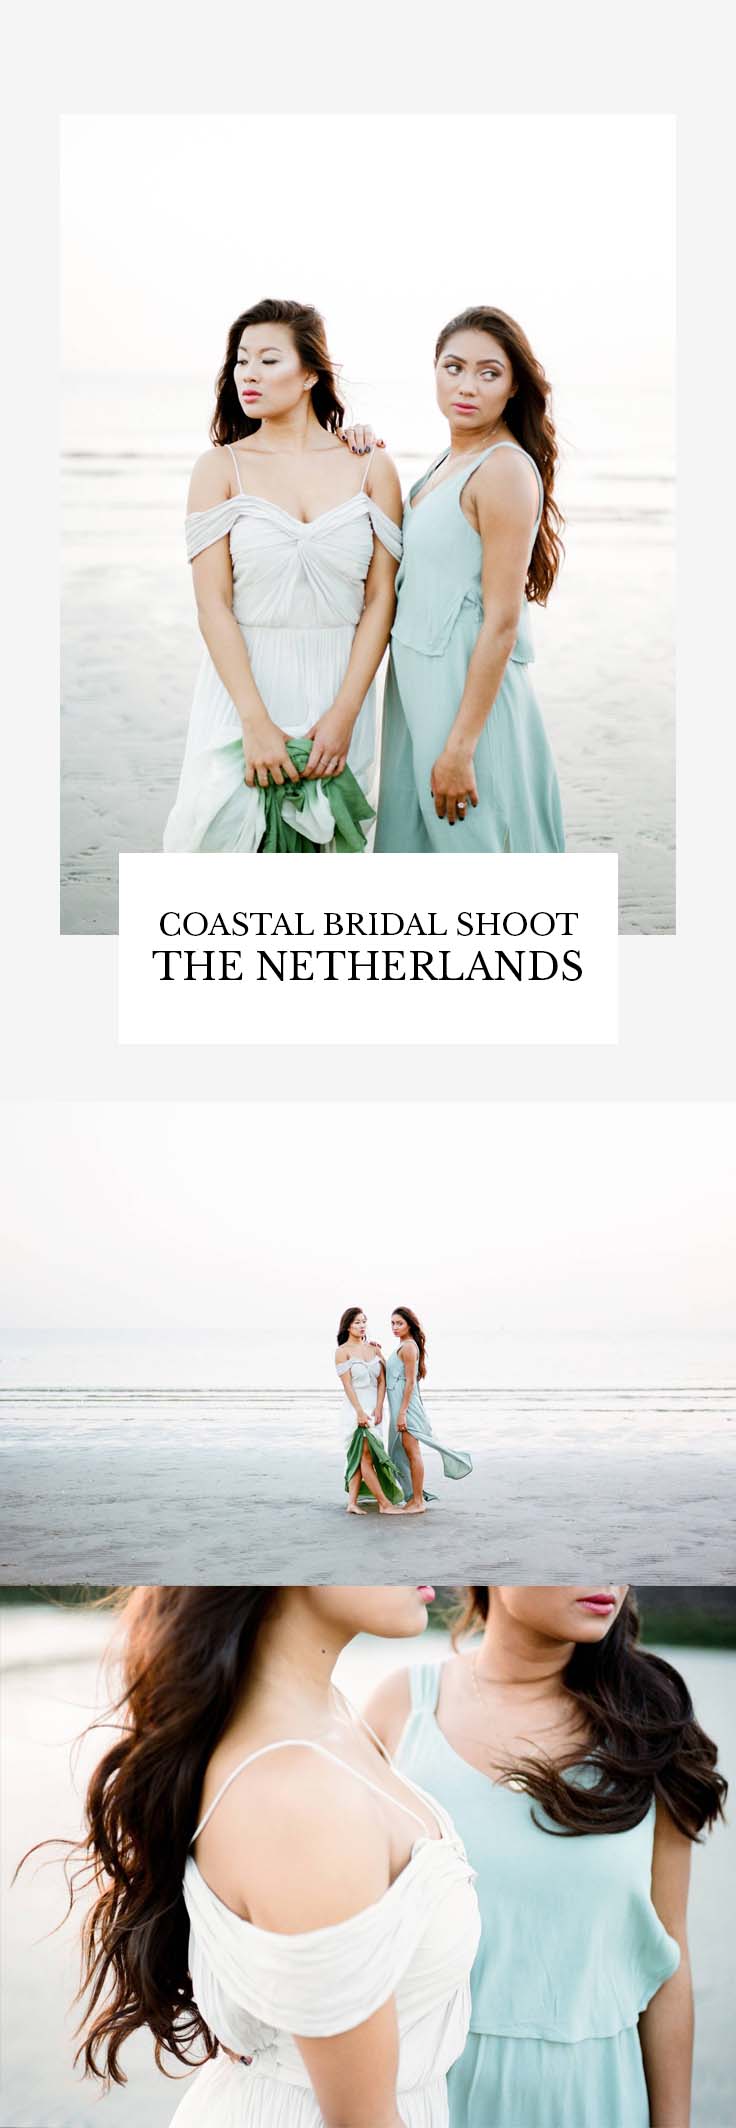 Coastal Bridal Shoot